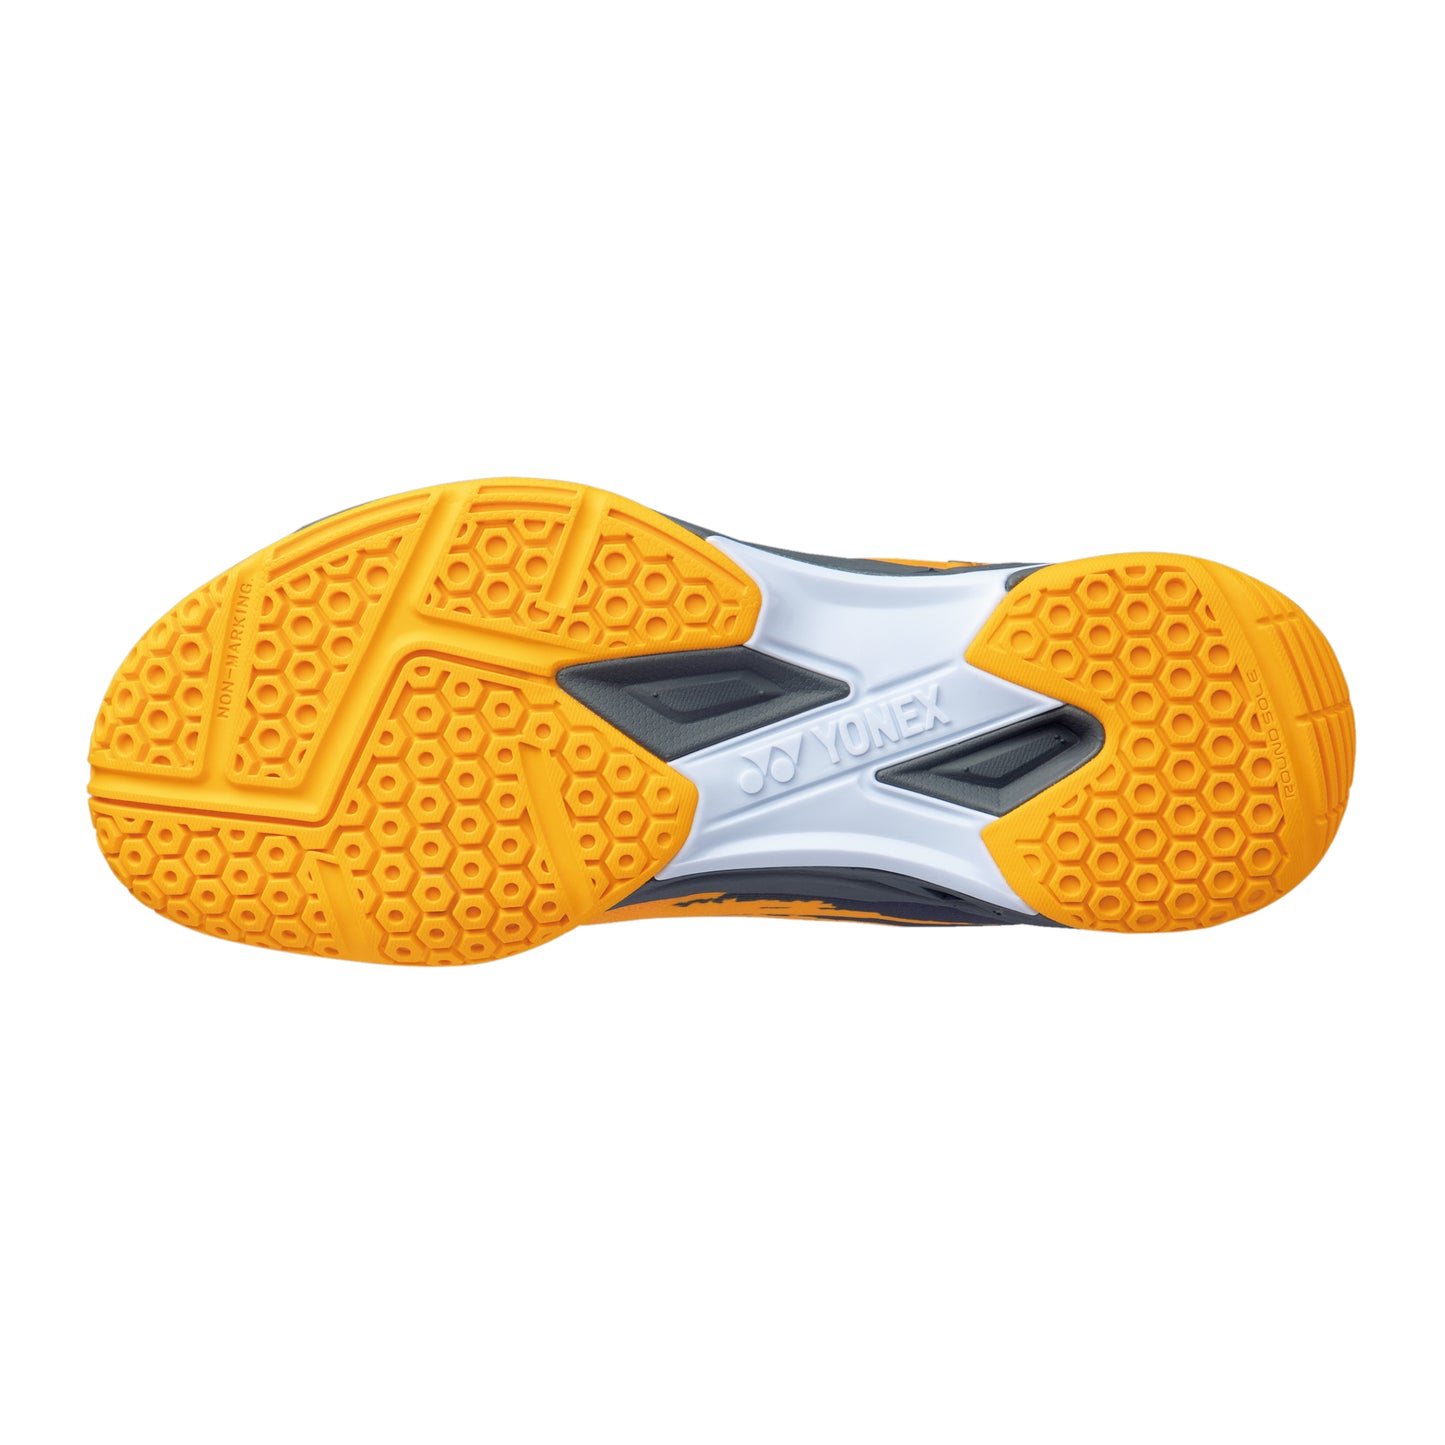 Yonex Power Cushion Cascade Drive Badminton Shoes - Best Price online Prokicksports.com